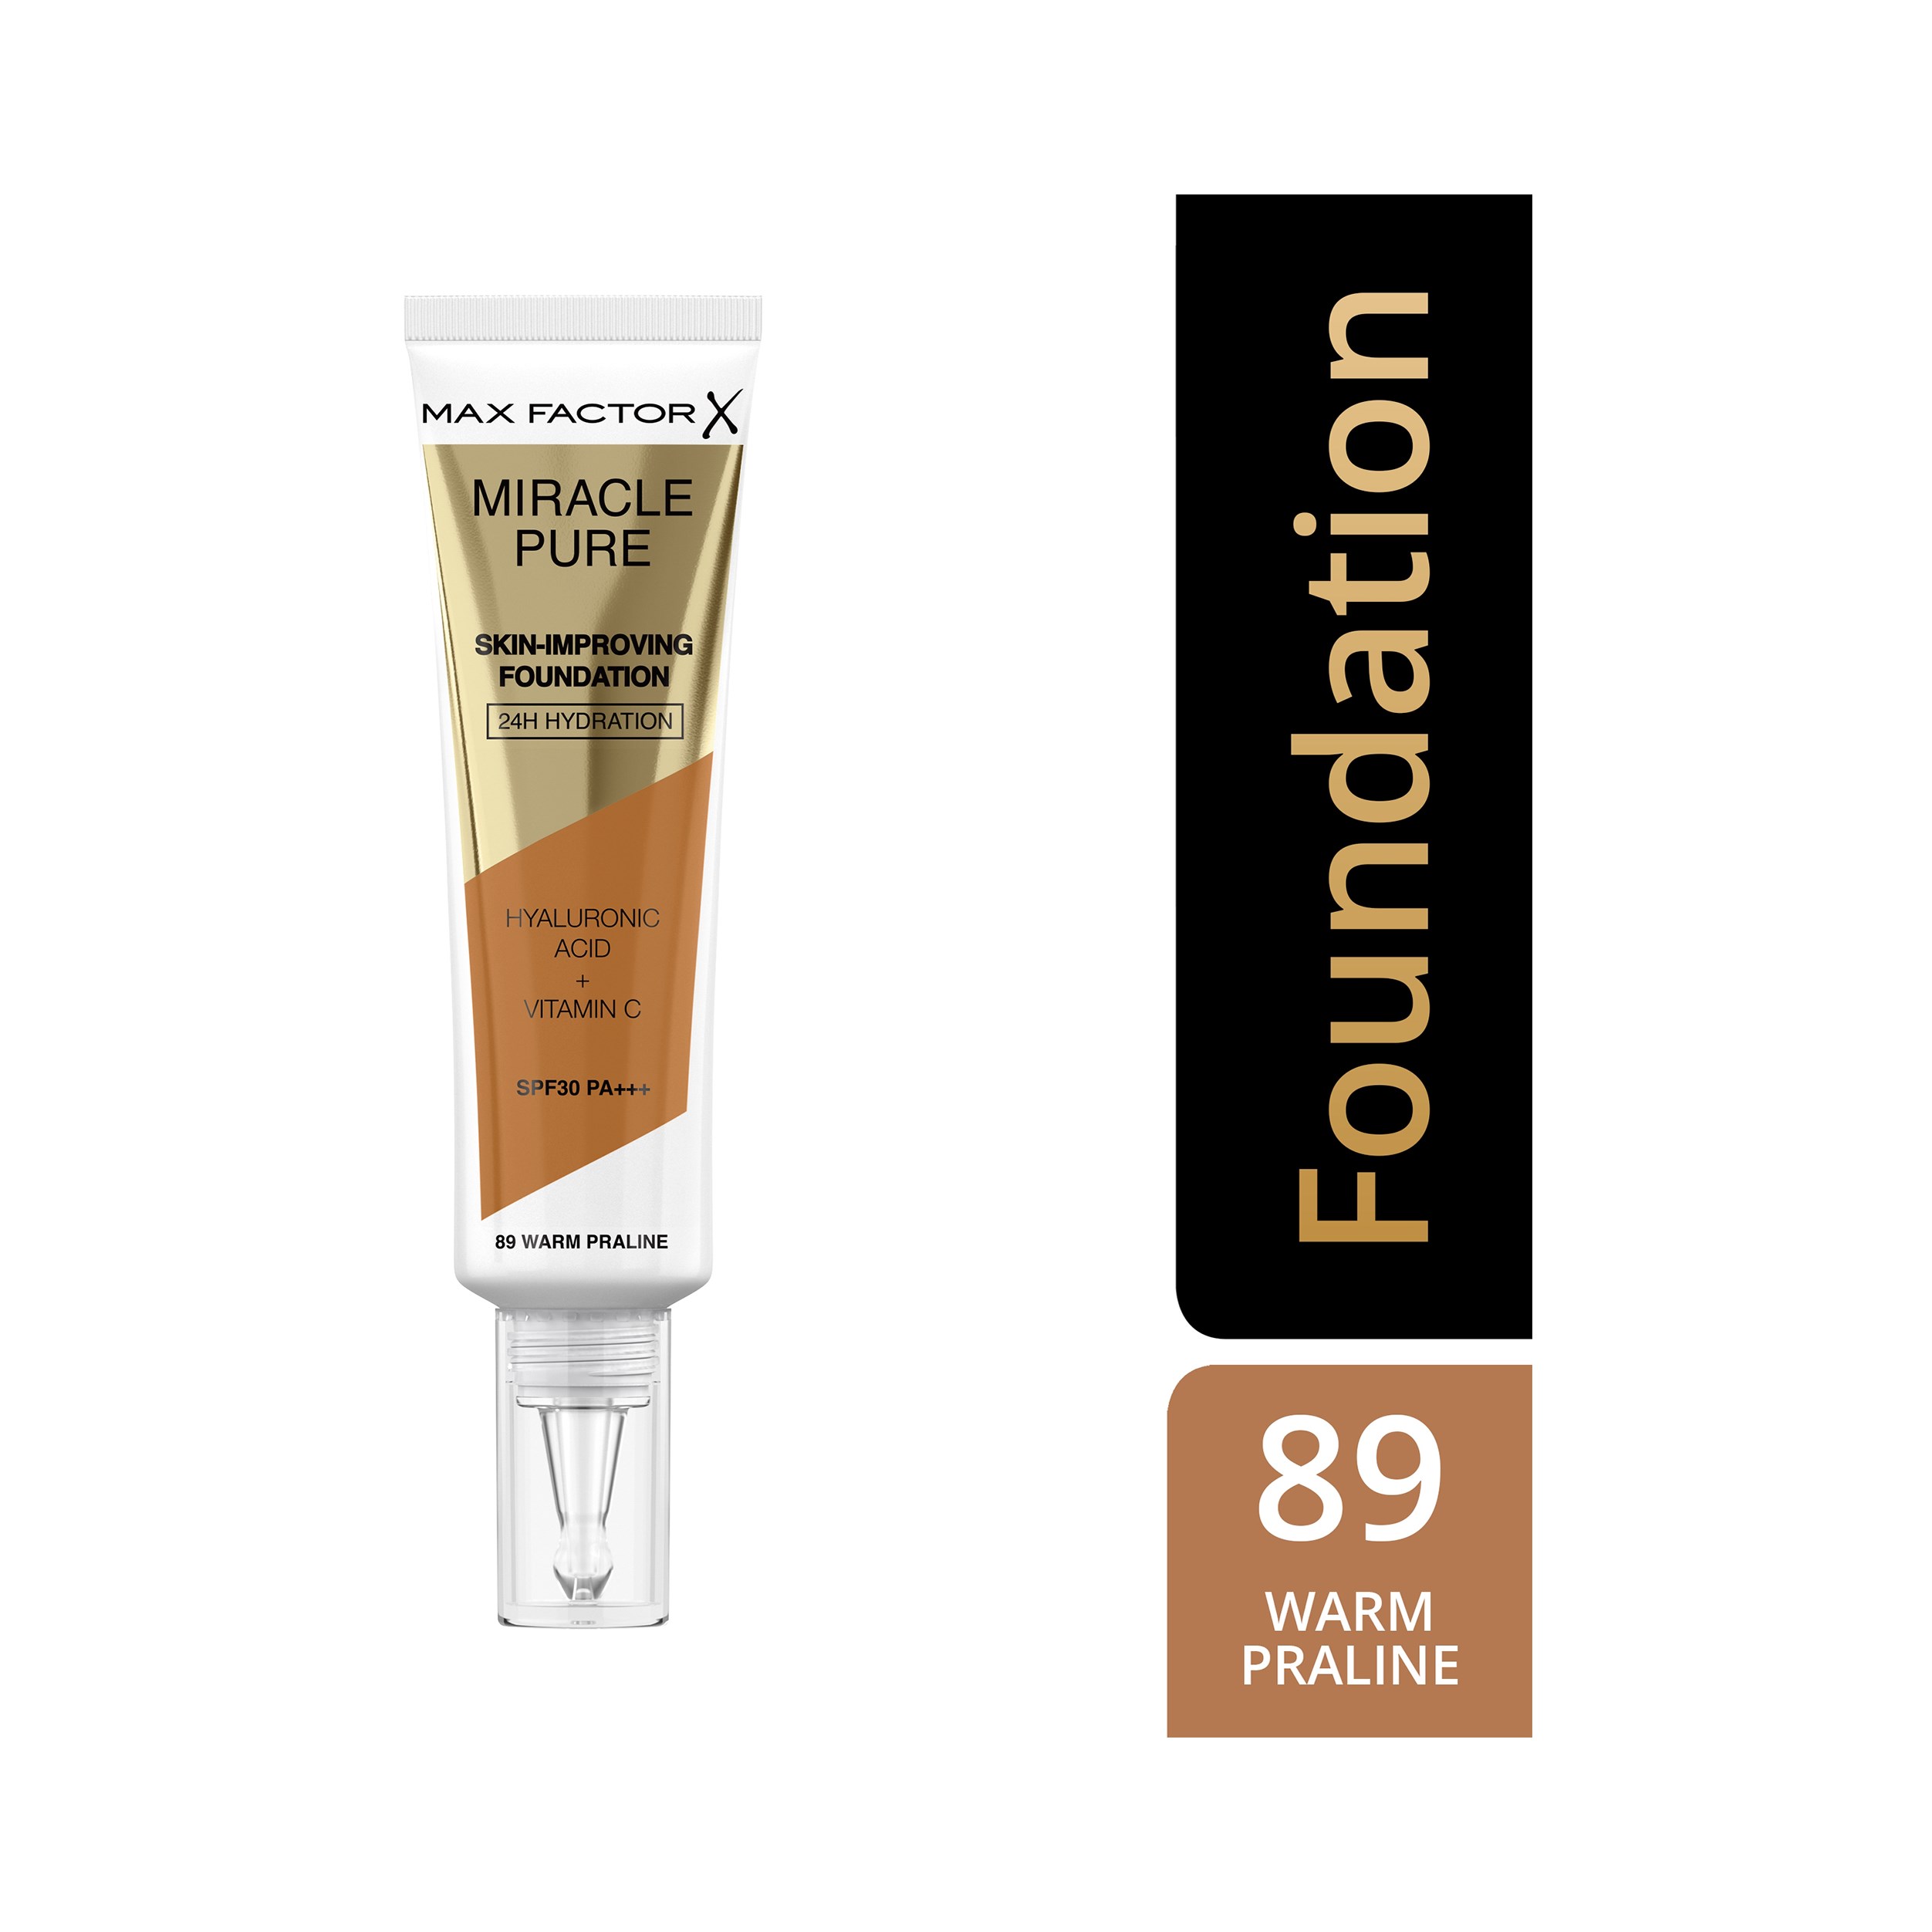 Läs mer om Max Factor Miracle Pure Skin-Improving Foundation 89 Warm Praline